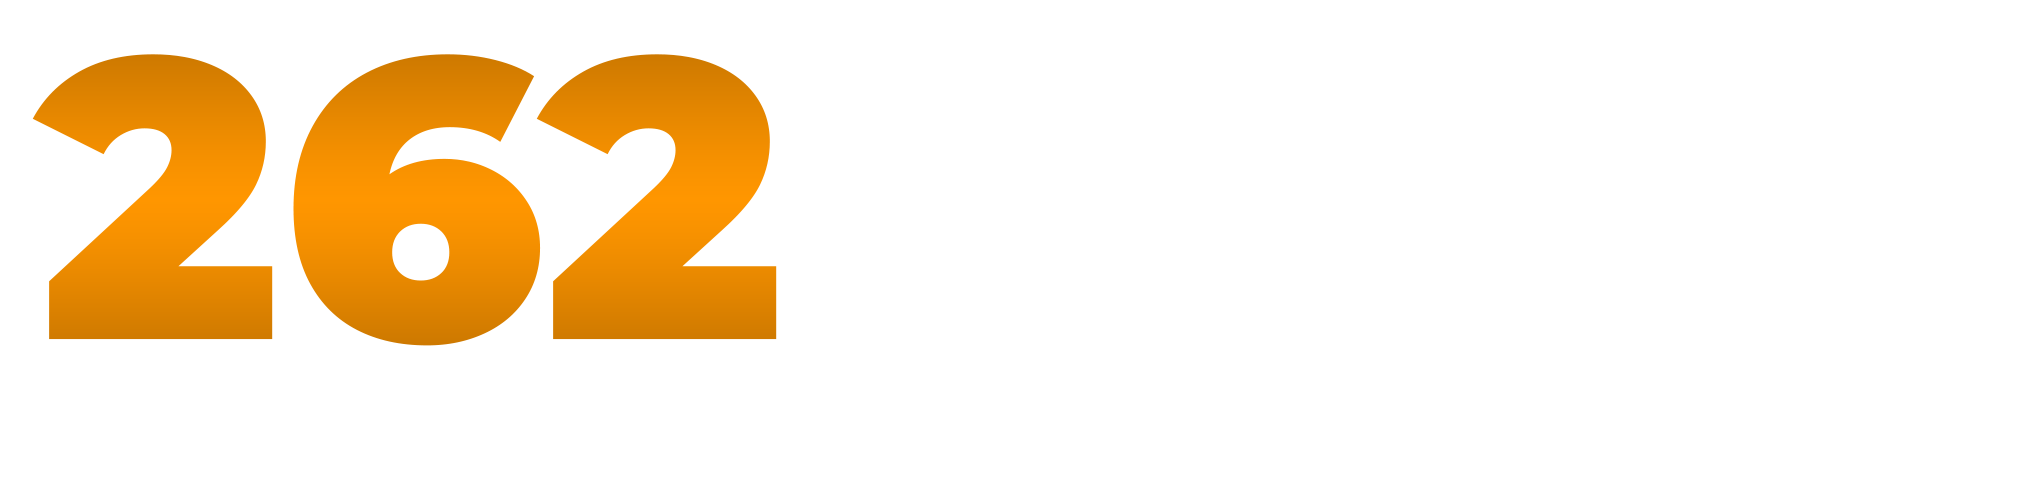 discover.com/personal-loans